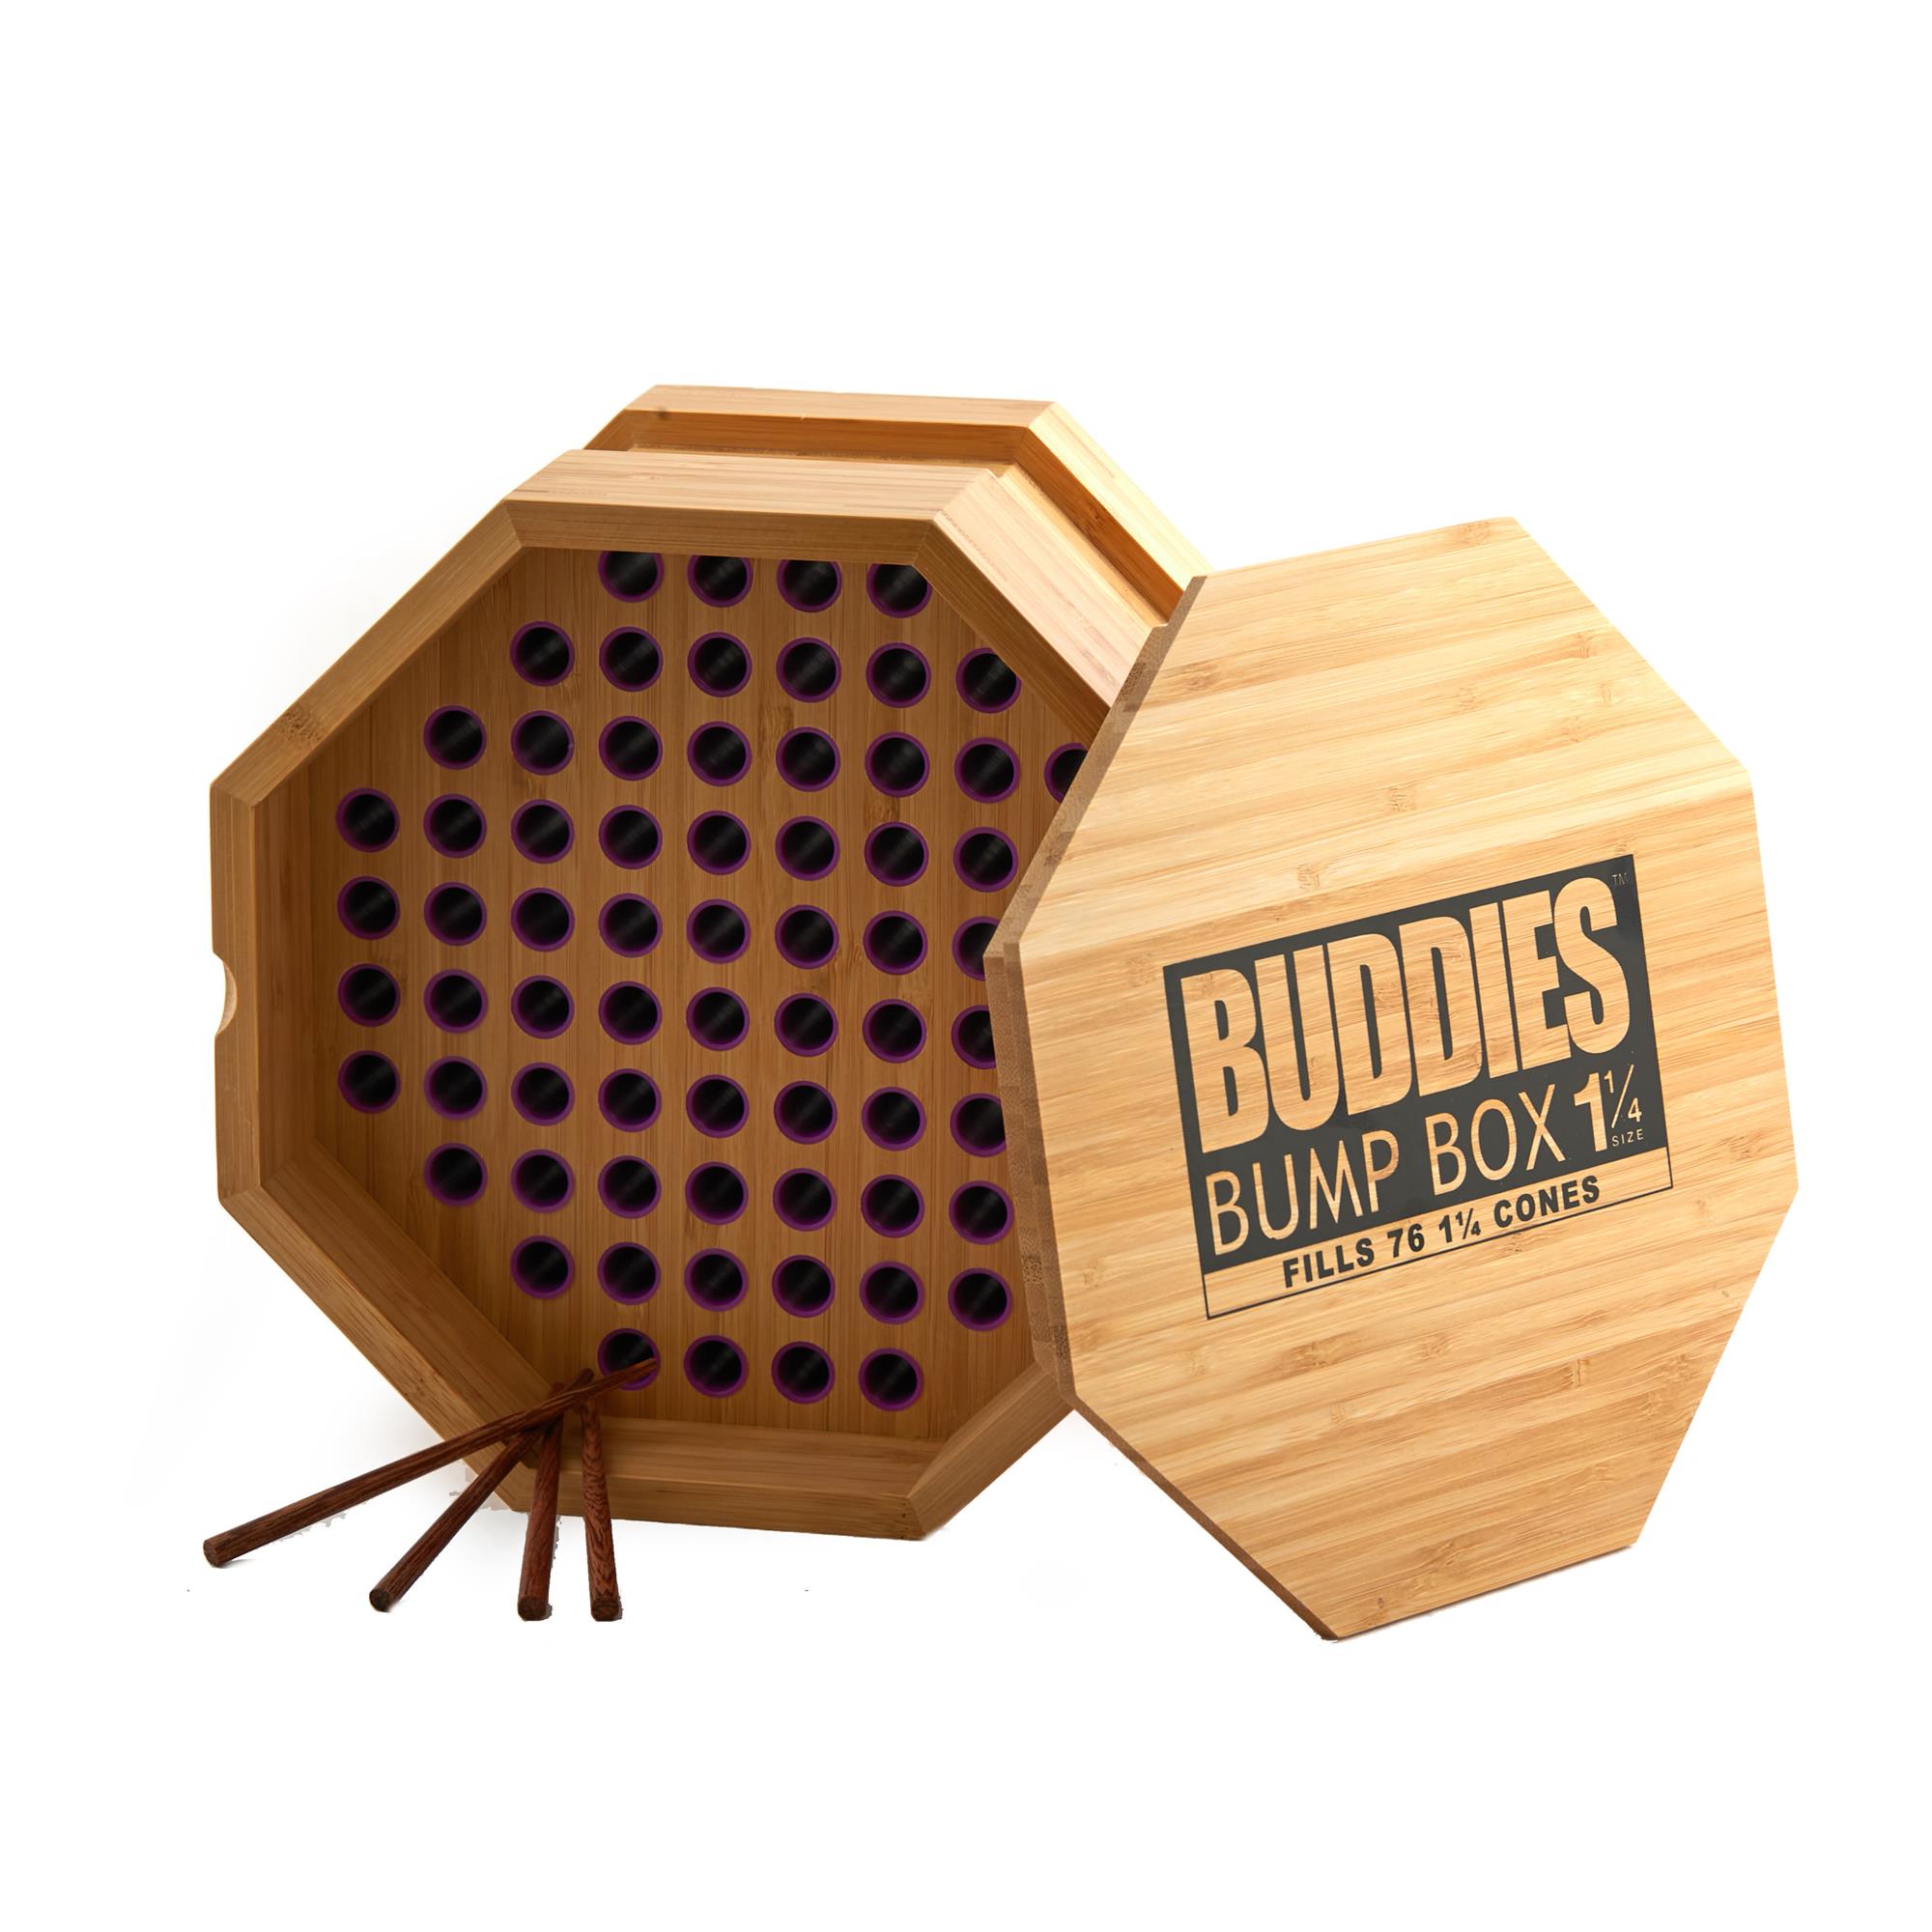 BUDDIES OCTAGONAL BUMP BOX 1/4